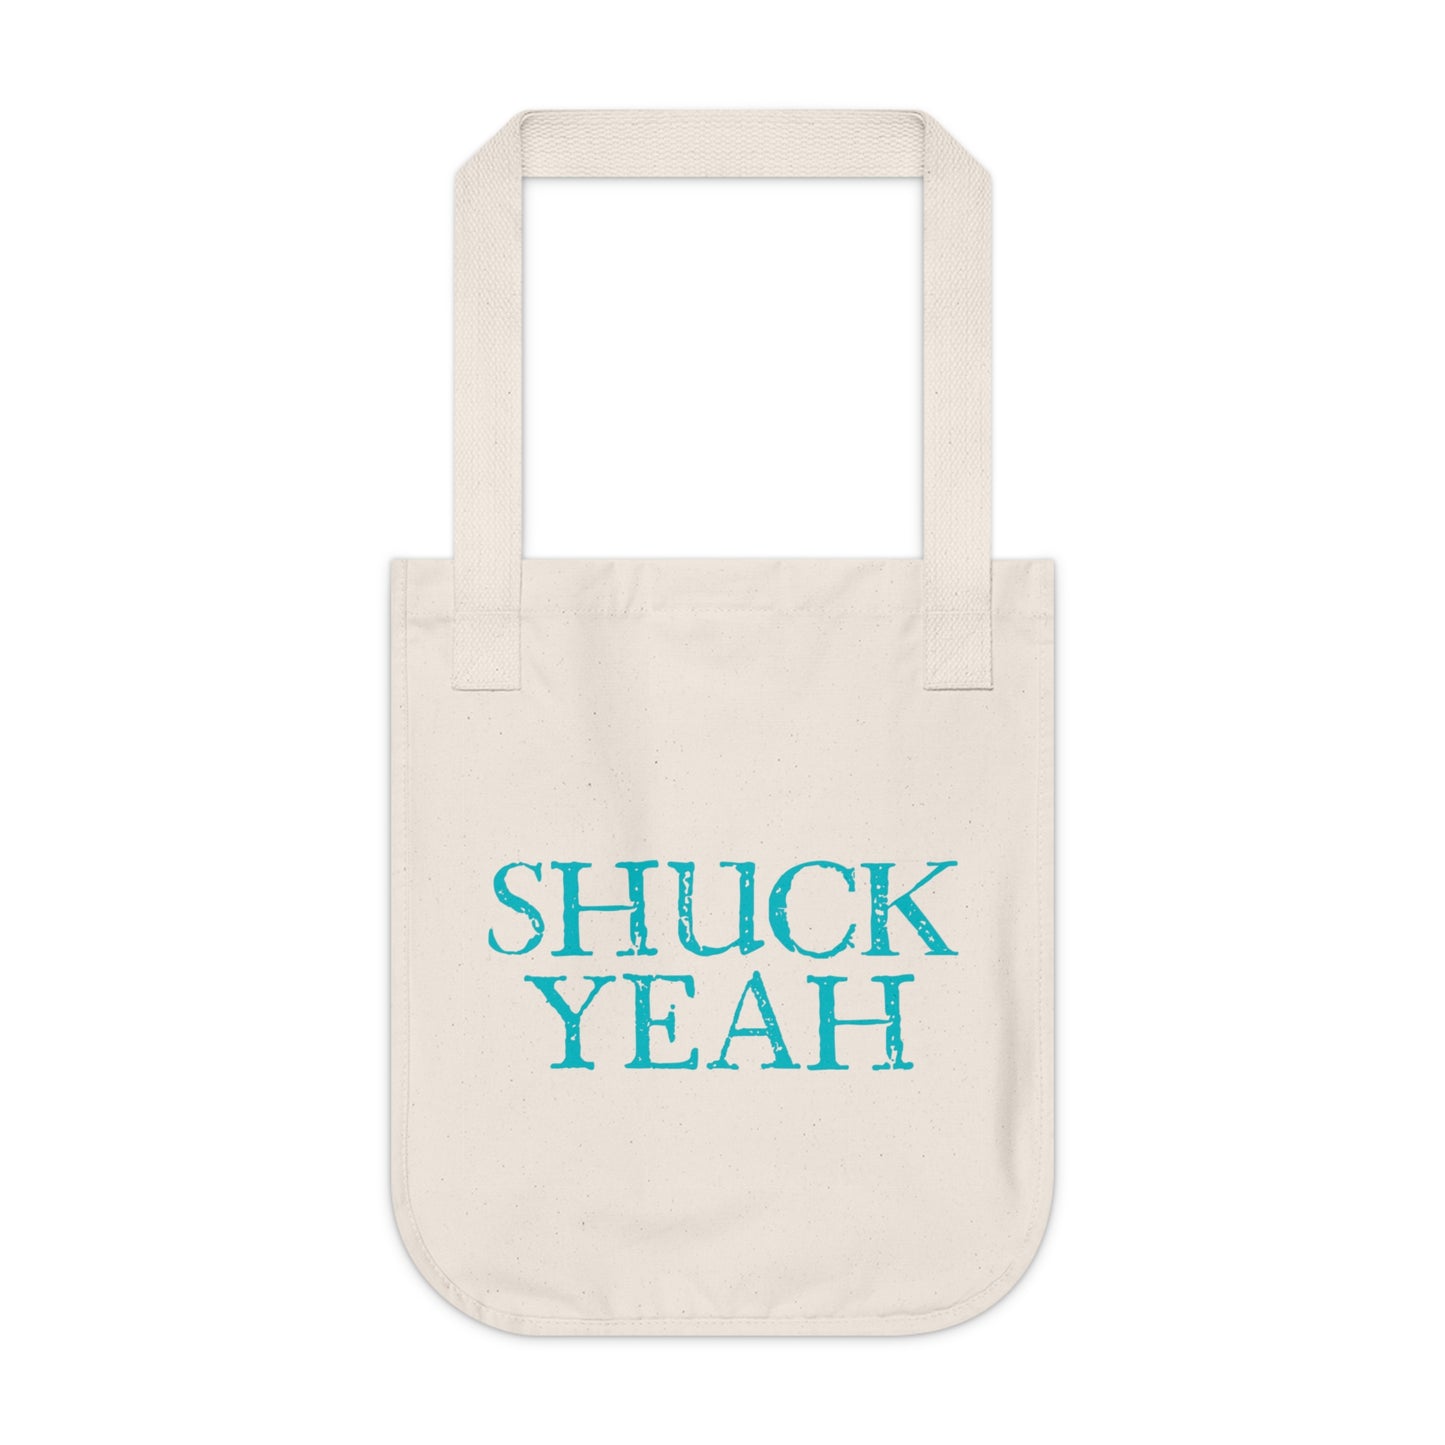 "Shuck Yeah" Reusable Organic Canvas Tote Bag